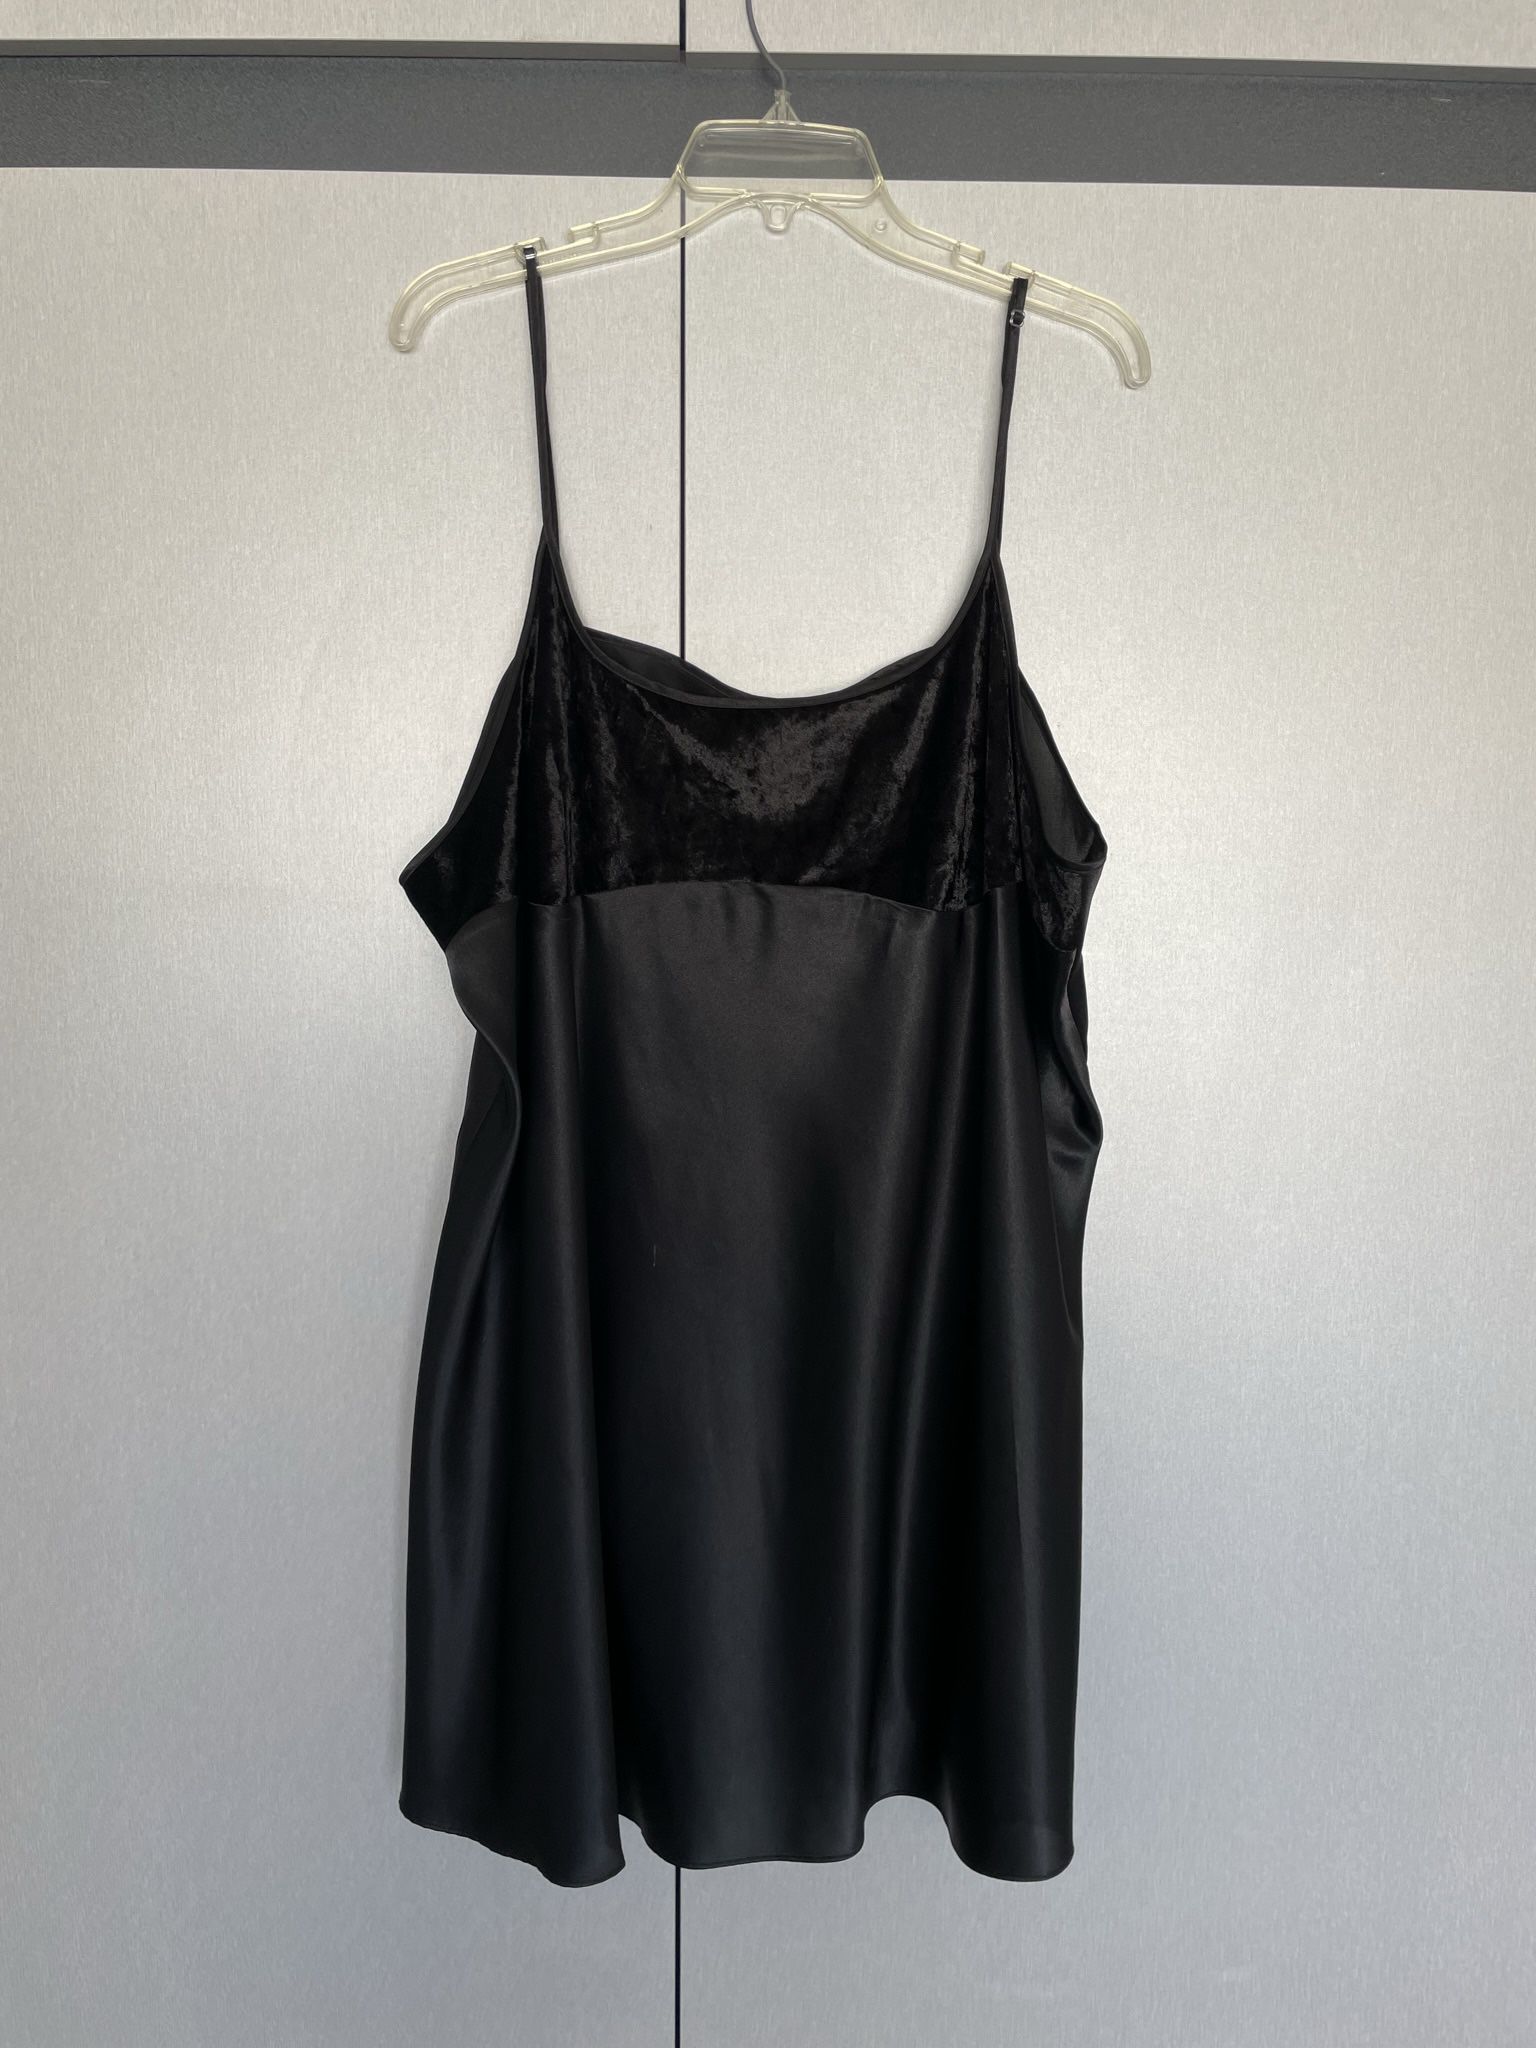 Black Satin/Velvet Nightgown Size 3X